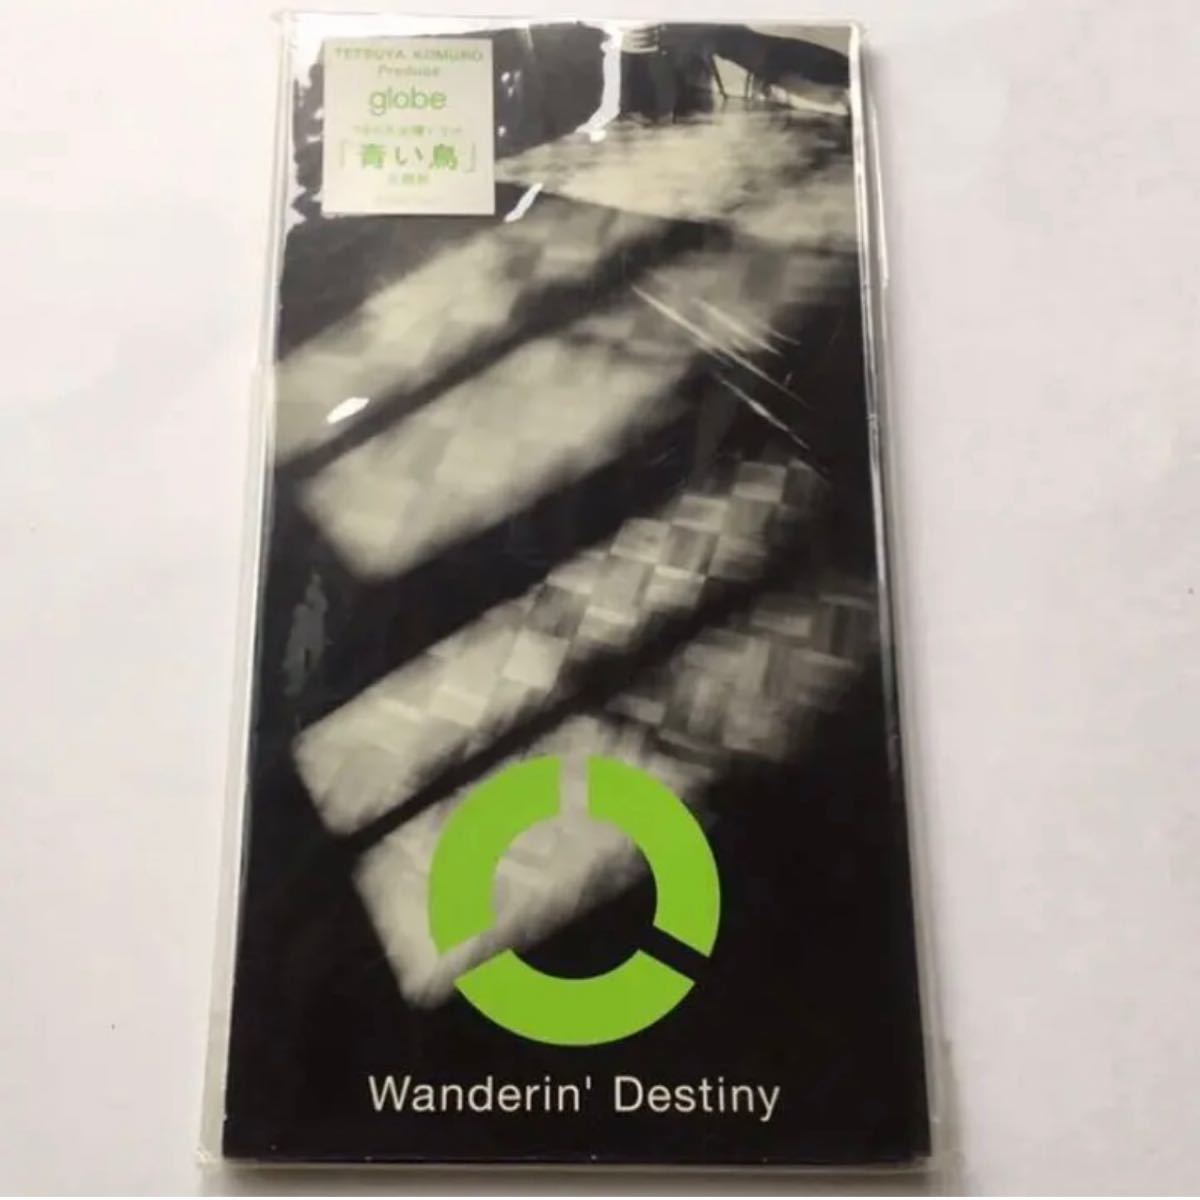 globe CD Wanderin' Destiny ワンダリン・デスティニー globe  グローブ シングル ドラマ『青い鳥』